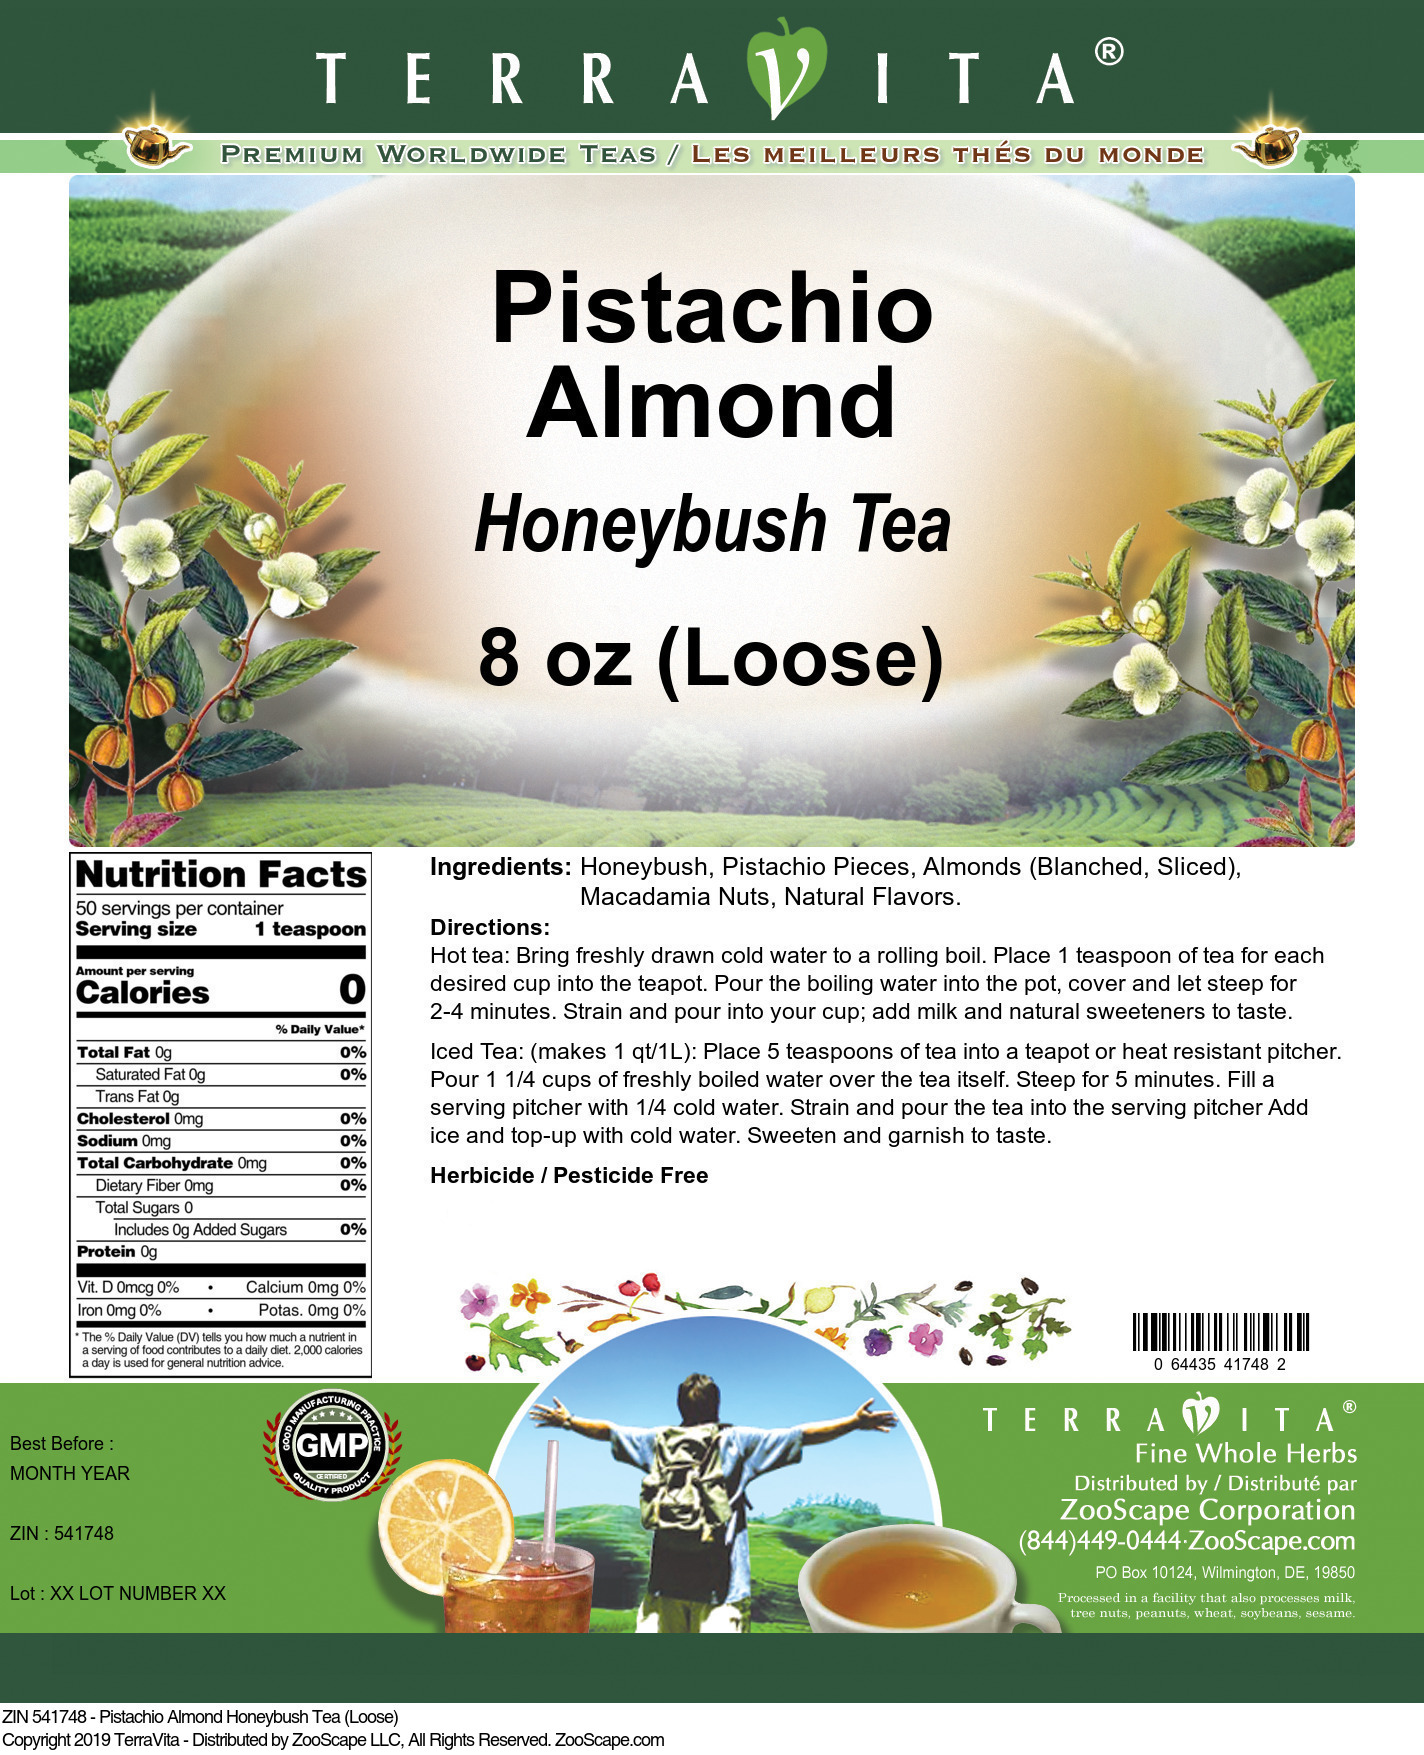 Pistachio Almond Honeybush Tea (Loose) - Label